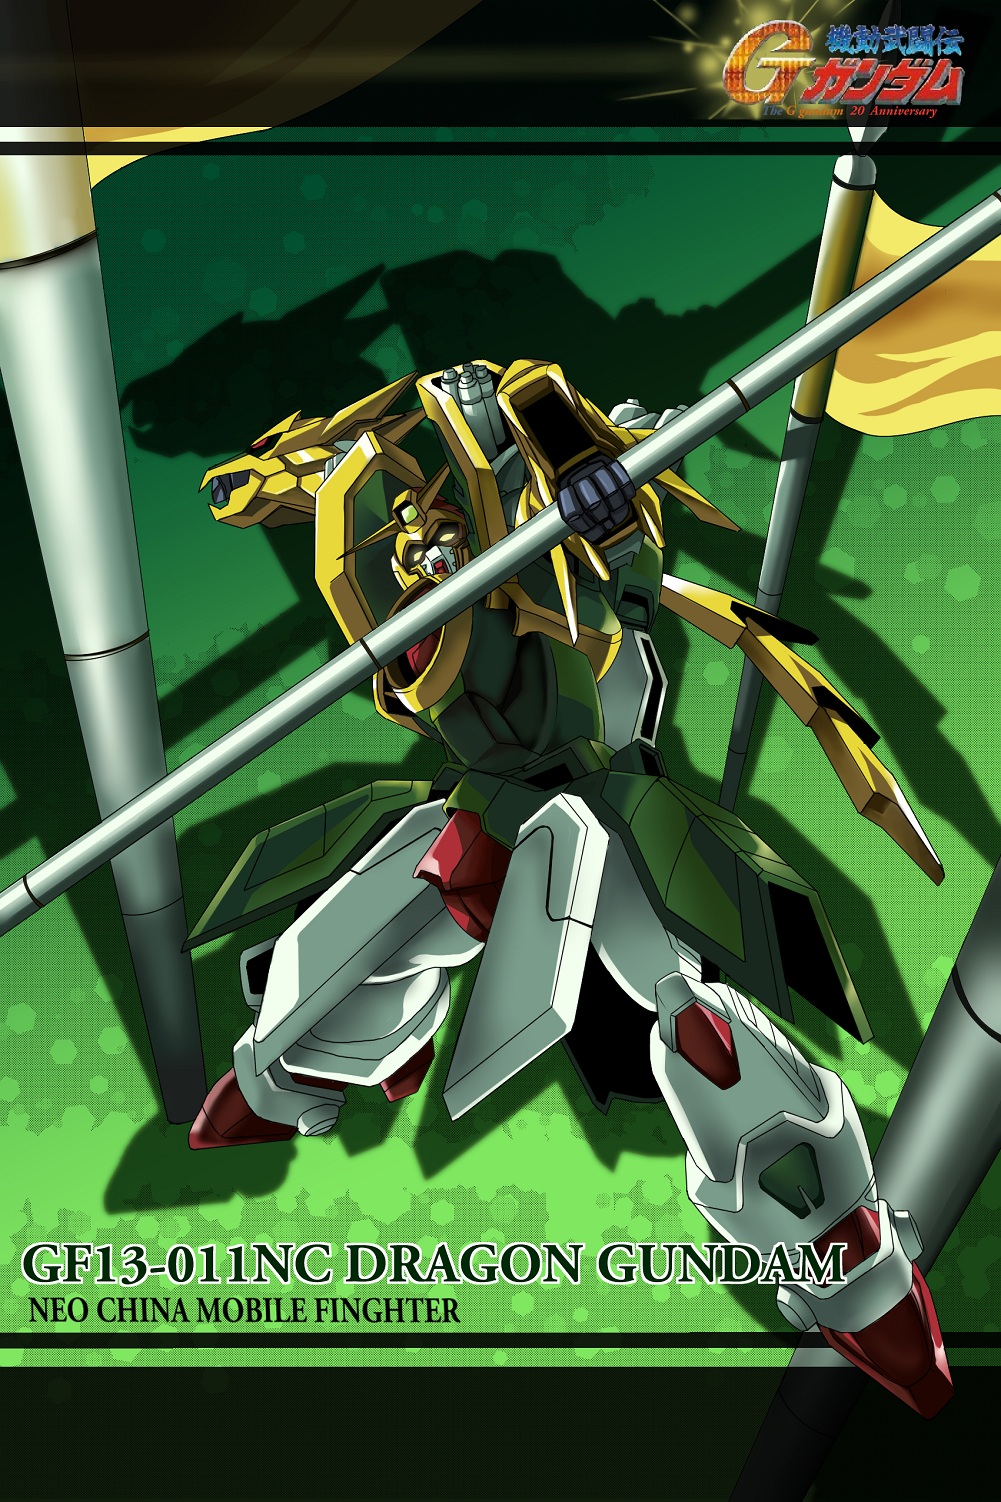 Anime 1001x1502 anime mechs Super Robot Taisen Gundam Mobile Fighter G Gundam artwork digital art fan art Dragon Gundam